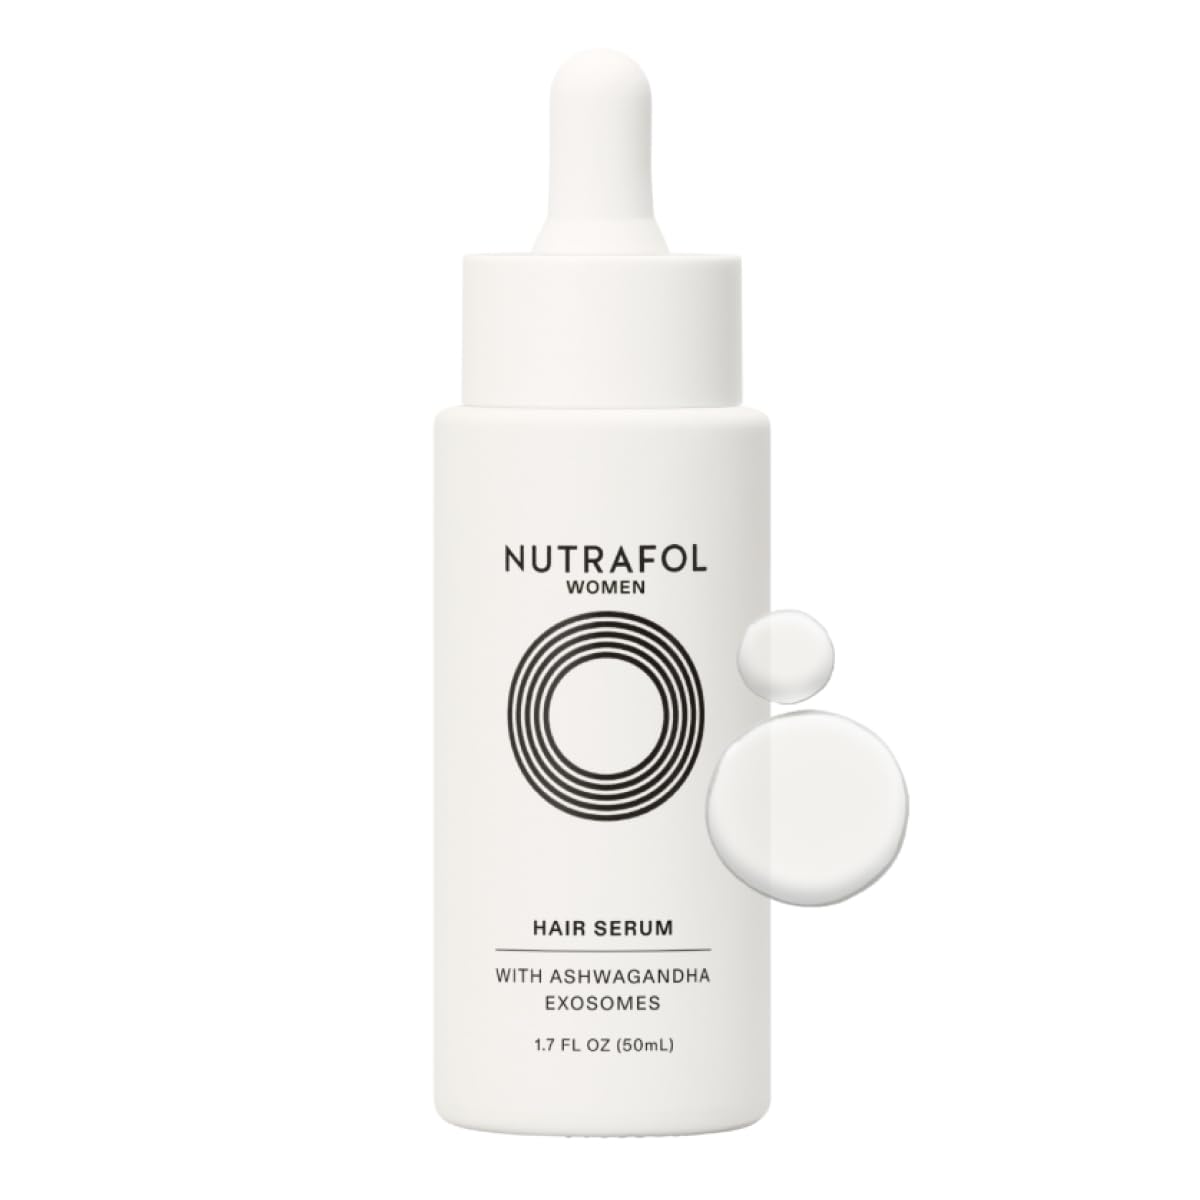 Nutrafol 女士护发精华素，支持明显更浓密、更强韧的头发，纯素，轻盈且快速吸收 - 1.7 液量盎司，1 瓶 - 1.7 液量盎司，1 瓶